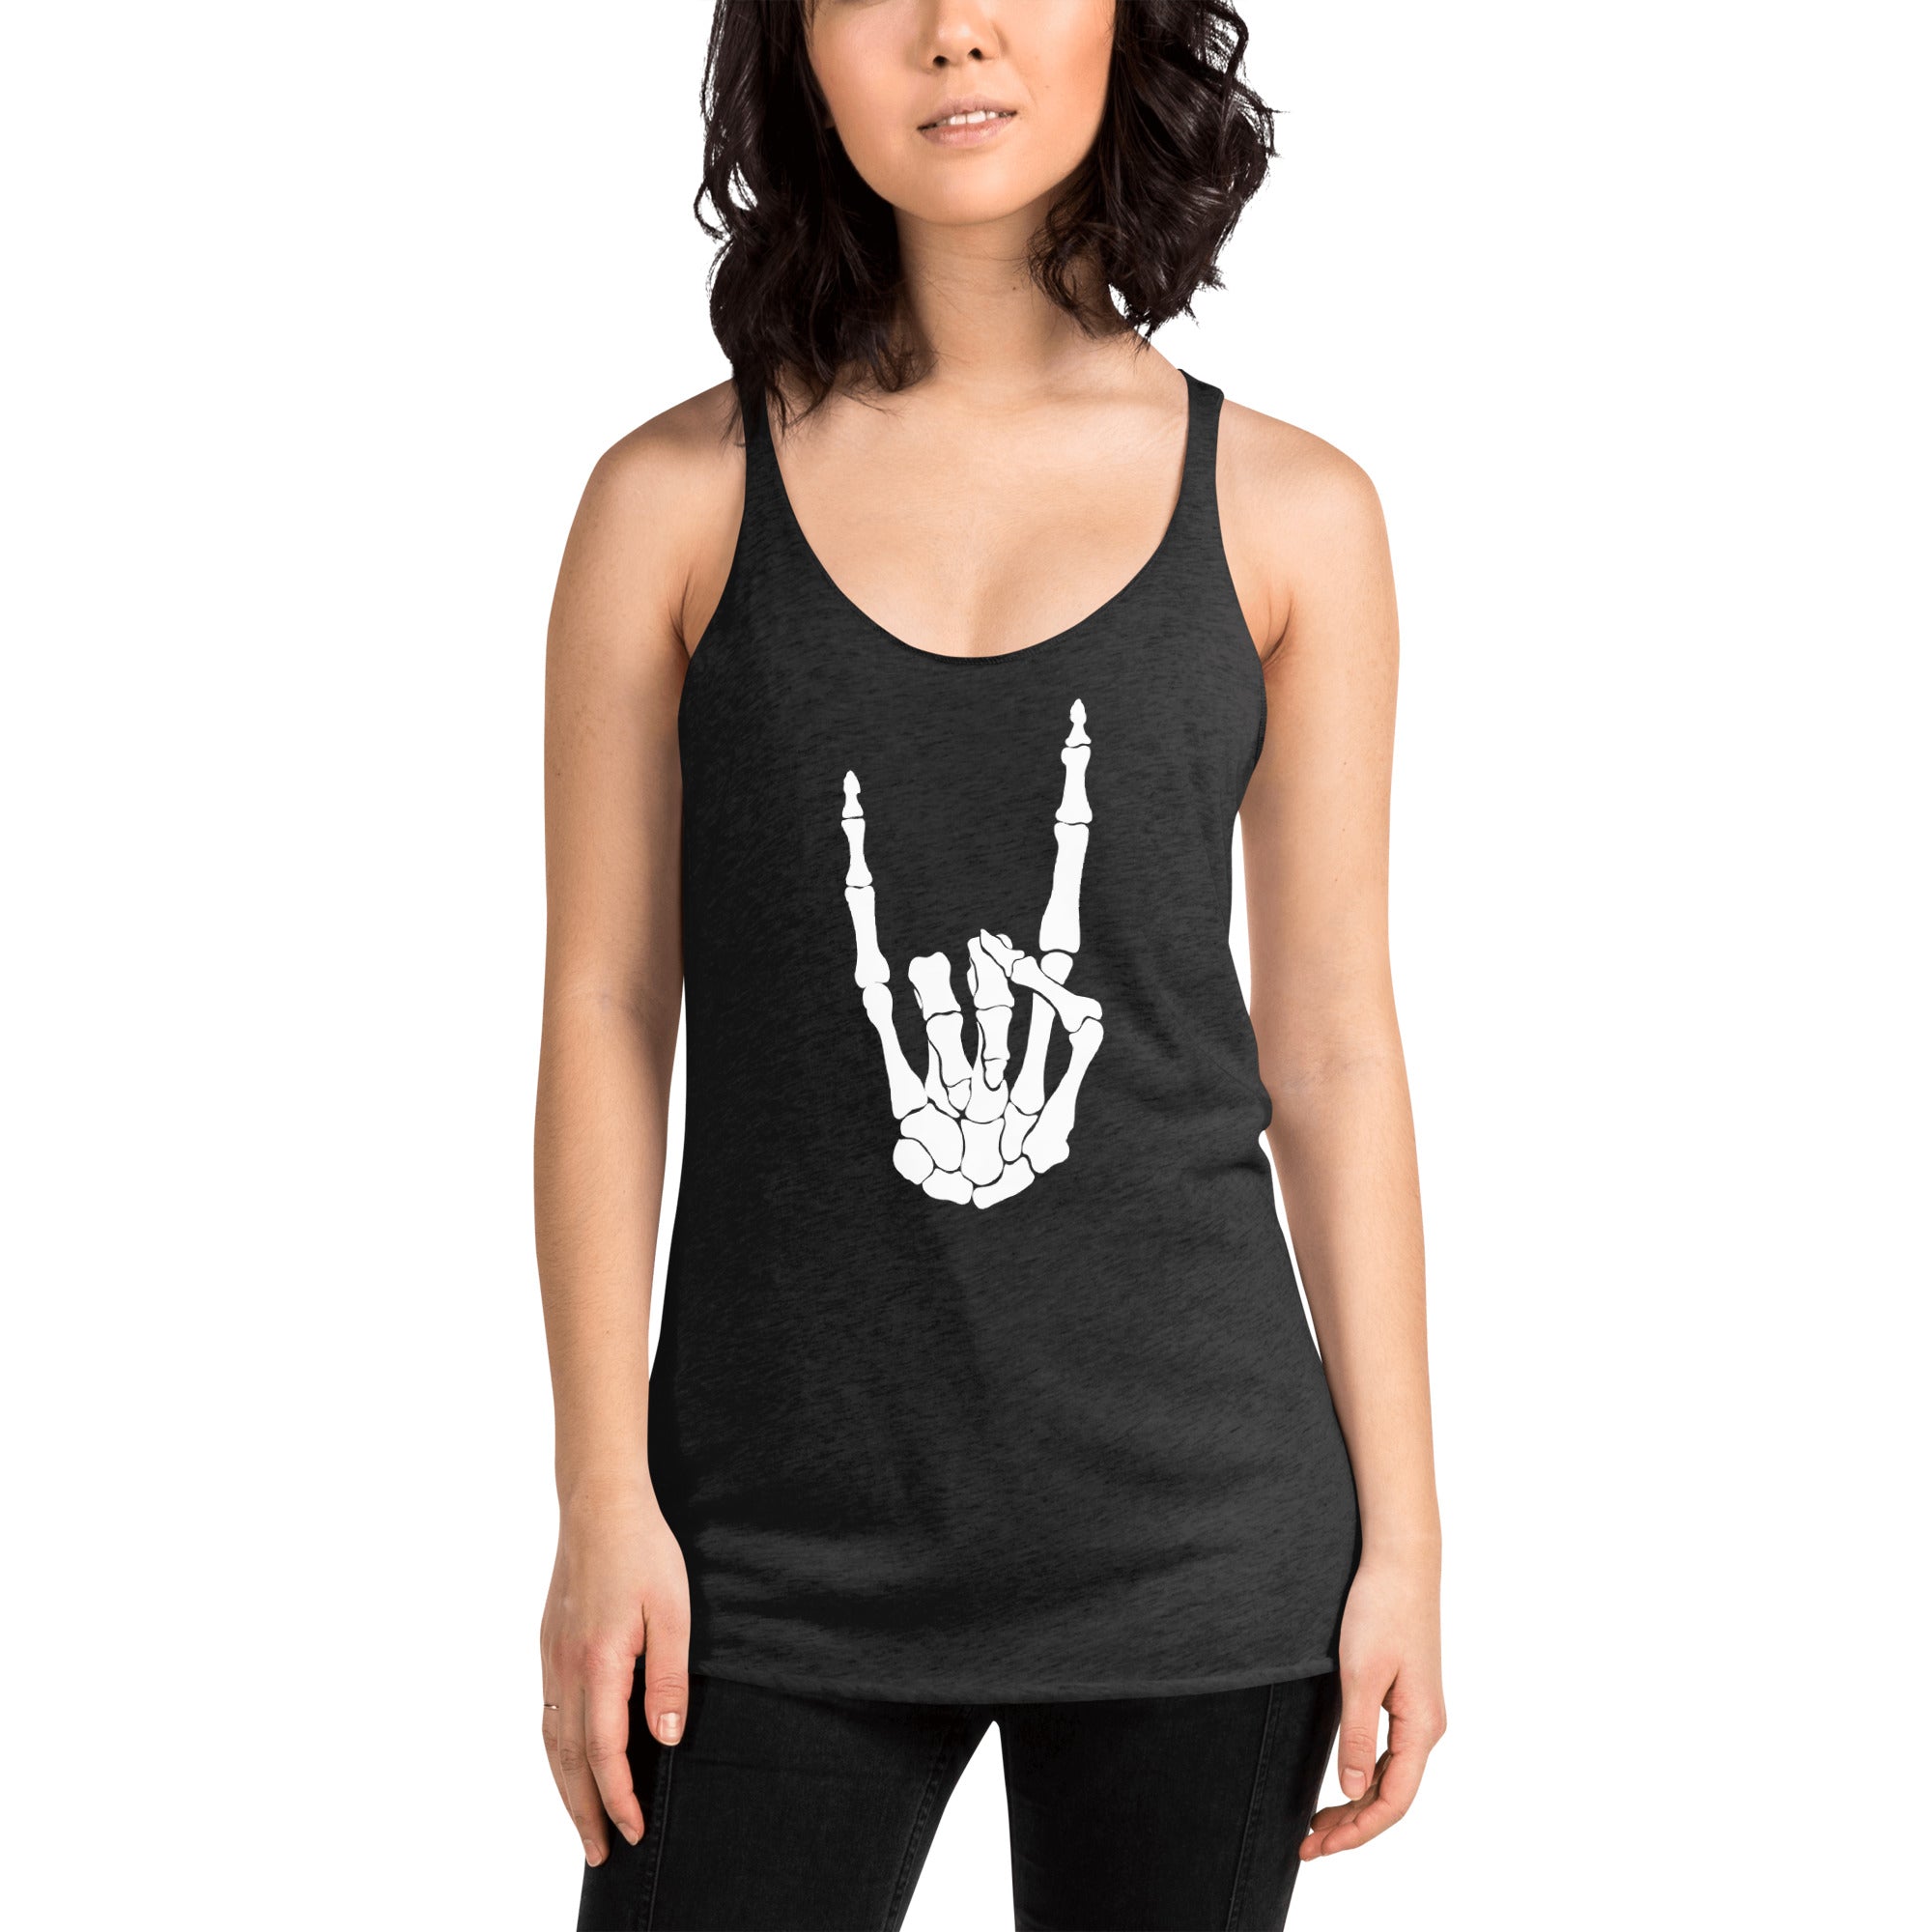 Devil Bone Hand Heavy Metal Horns Up Sign Women's Racerback Tank Top Shirt White Print - Edge of Life Designs